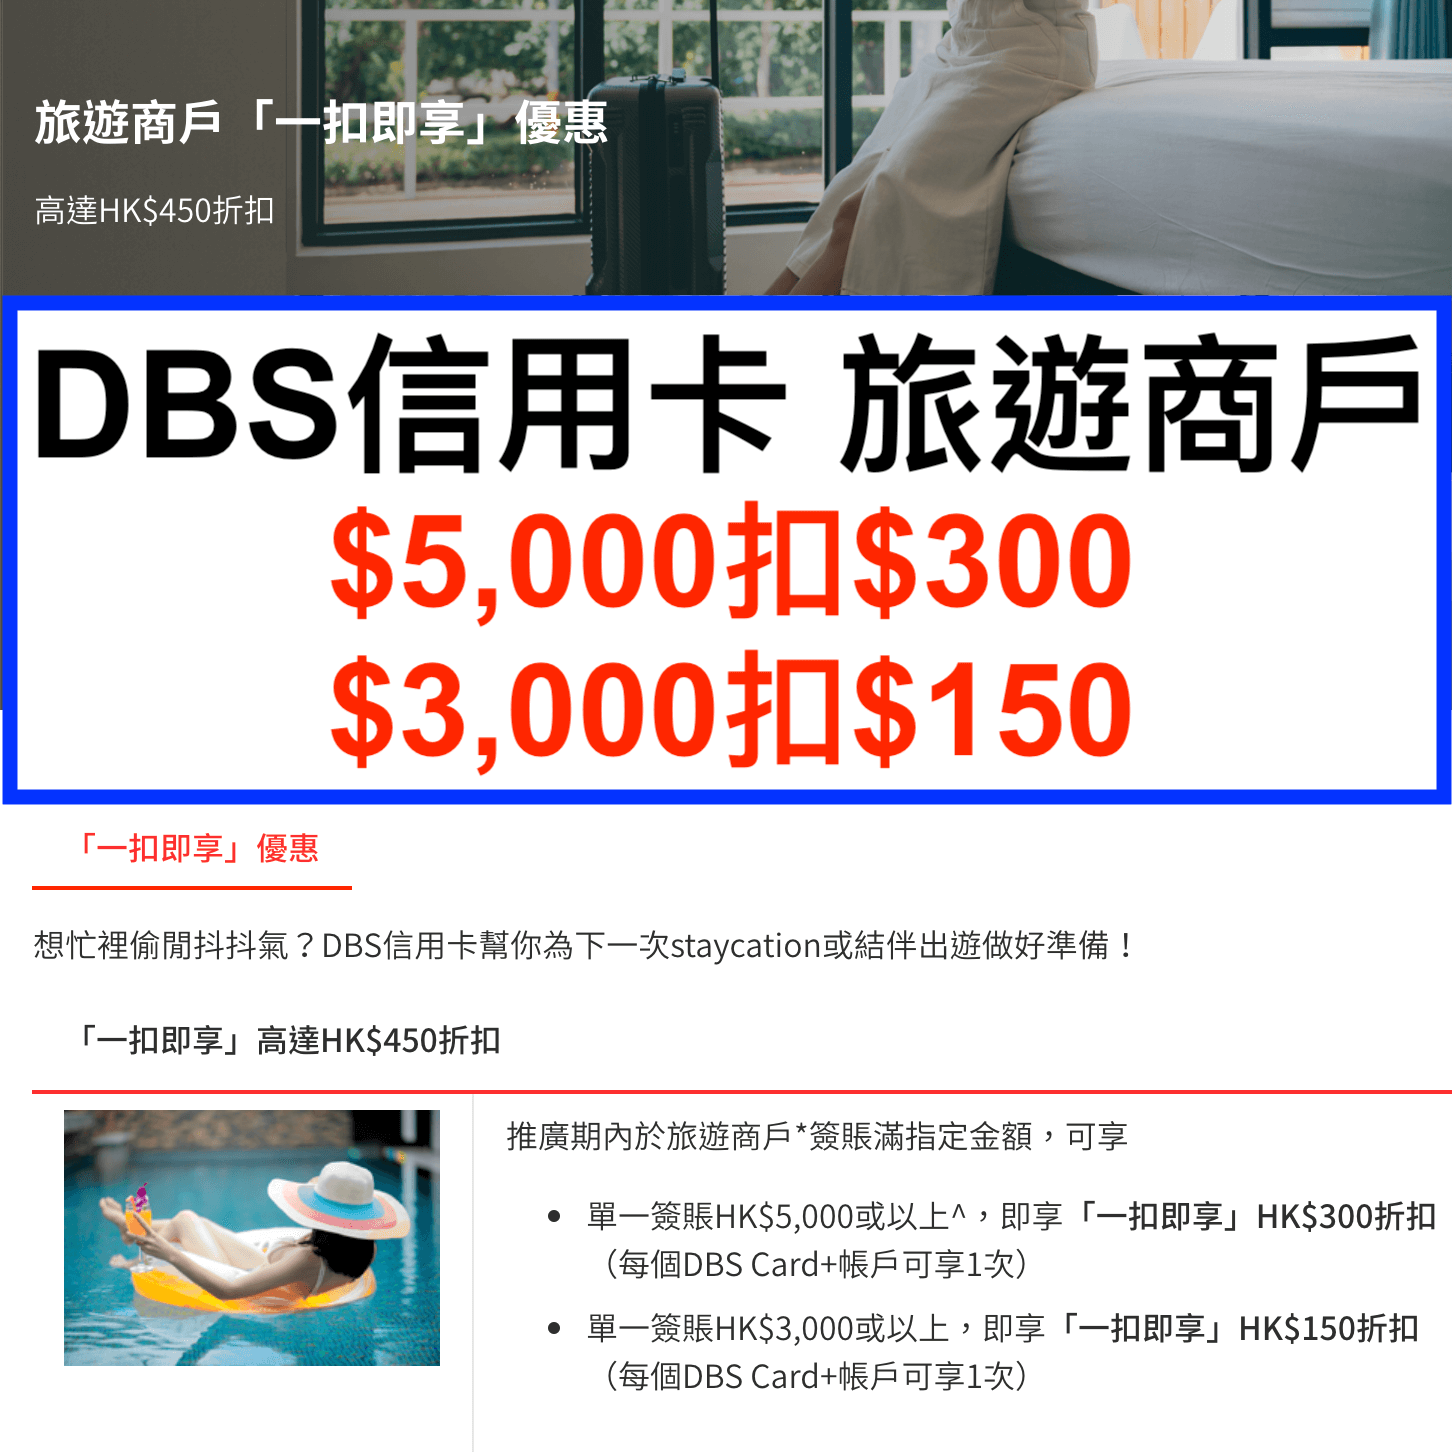 DBS信用卡旅遊商戶一扣即享優惠！$5,000扣$300；$3,000扣$150！高達HK$450折扣！